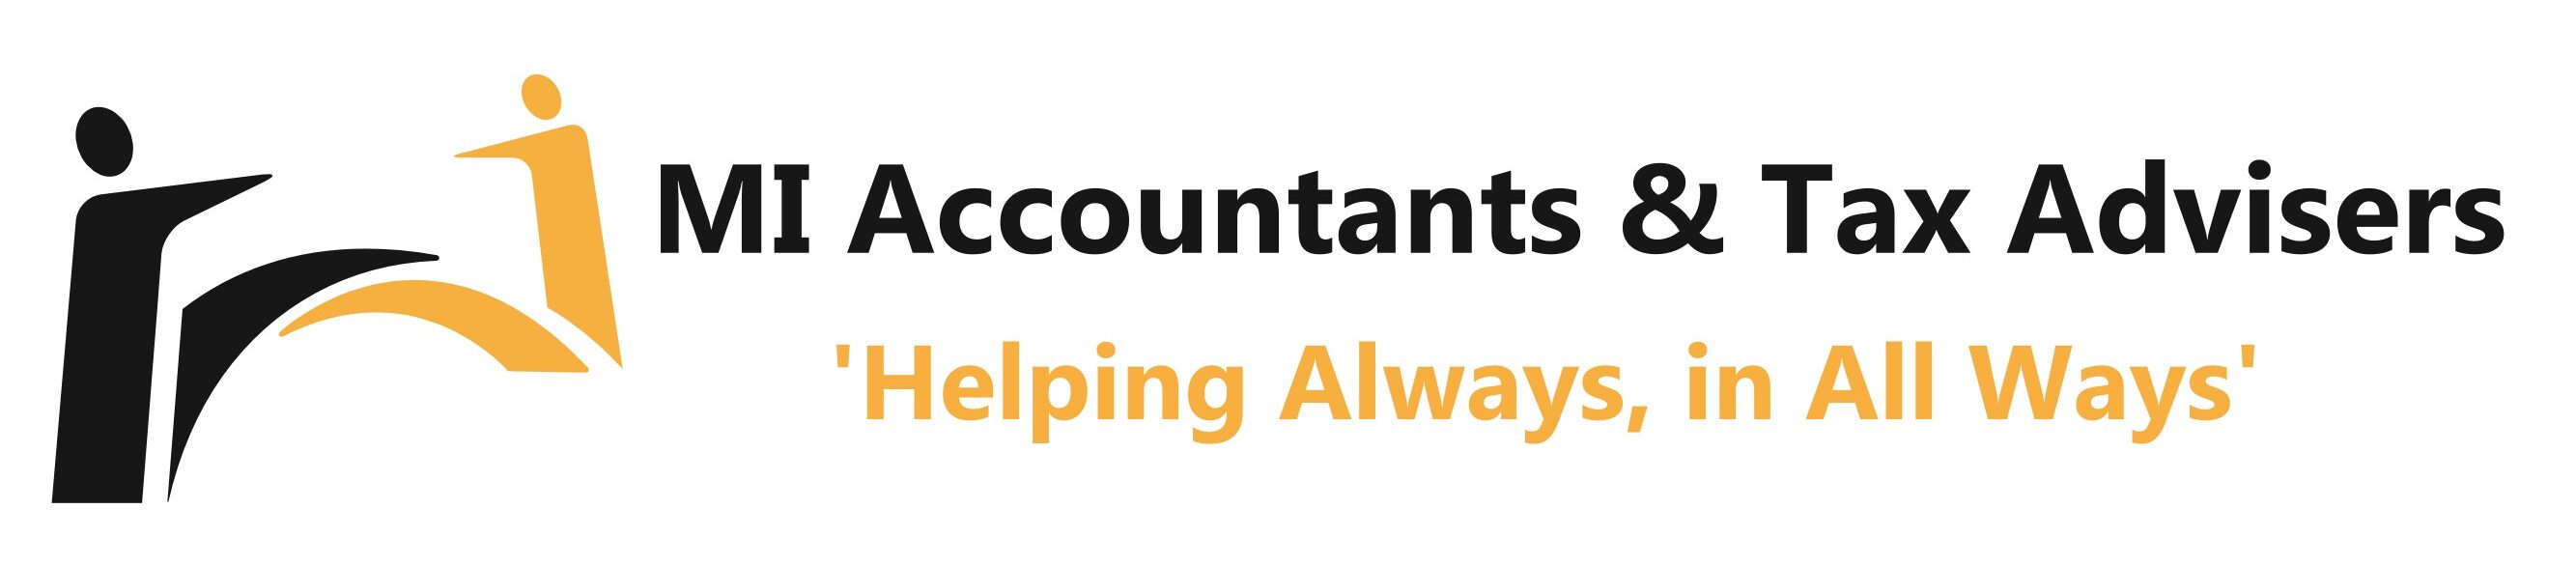 MI Accountants and Tax Advisers